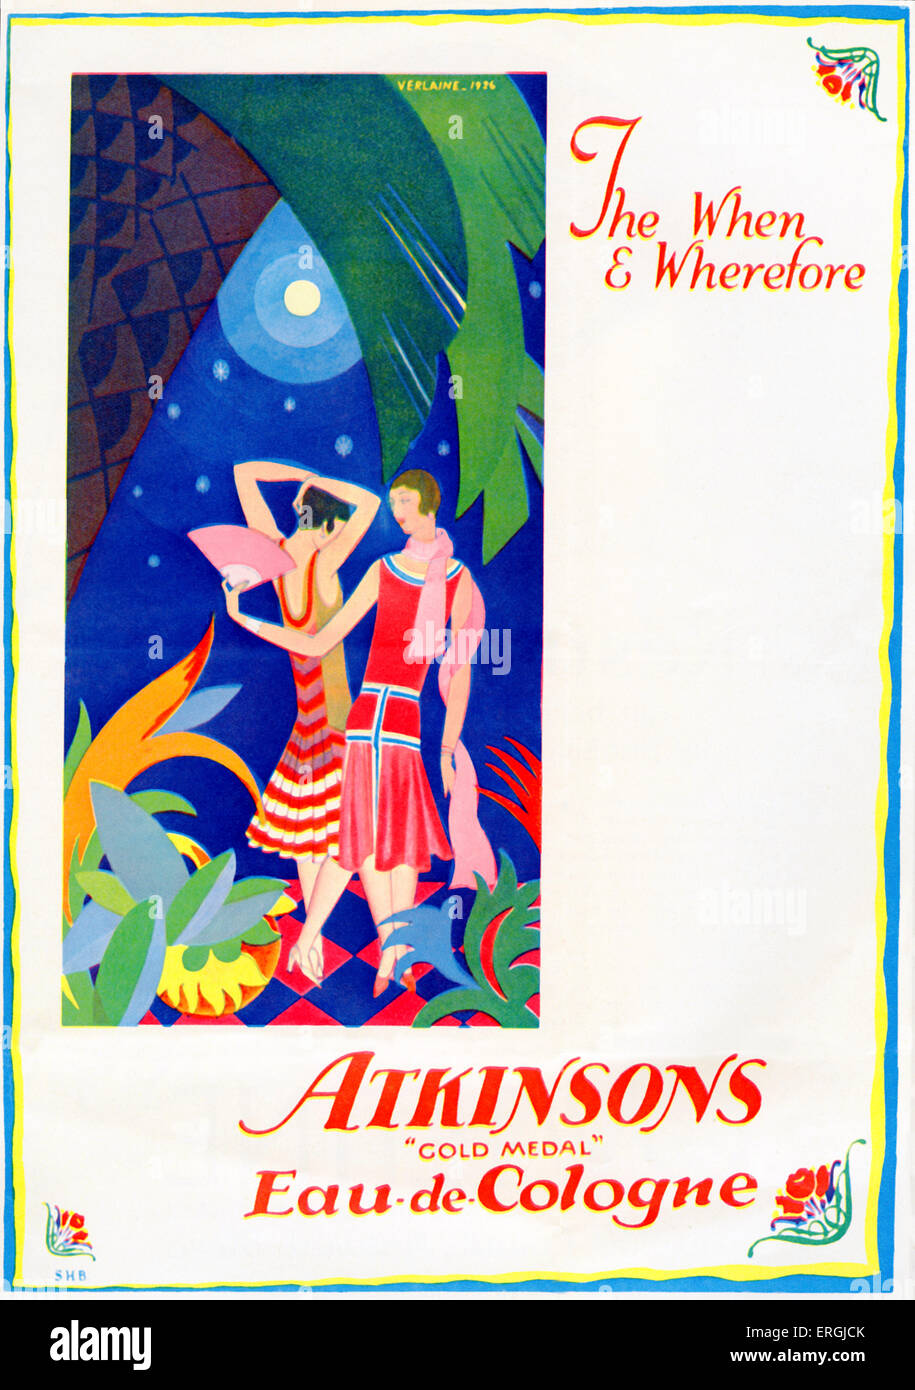 Atkinsons 'Gold Medal' Eau-de-Cologne perfume advertisement, showing 1920s fashion.. Illustration by Verlaine (dates unknown), Stock Photo